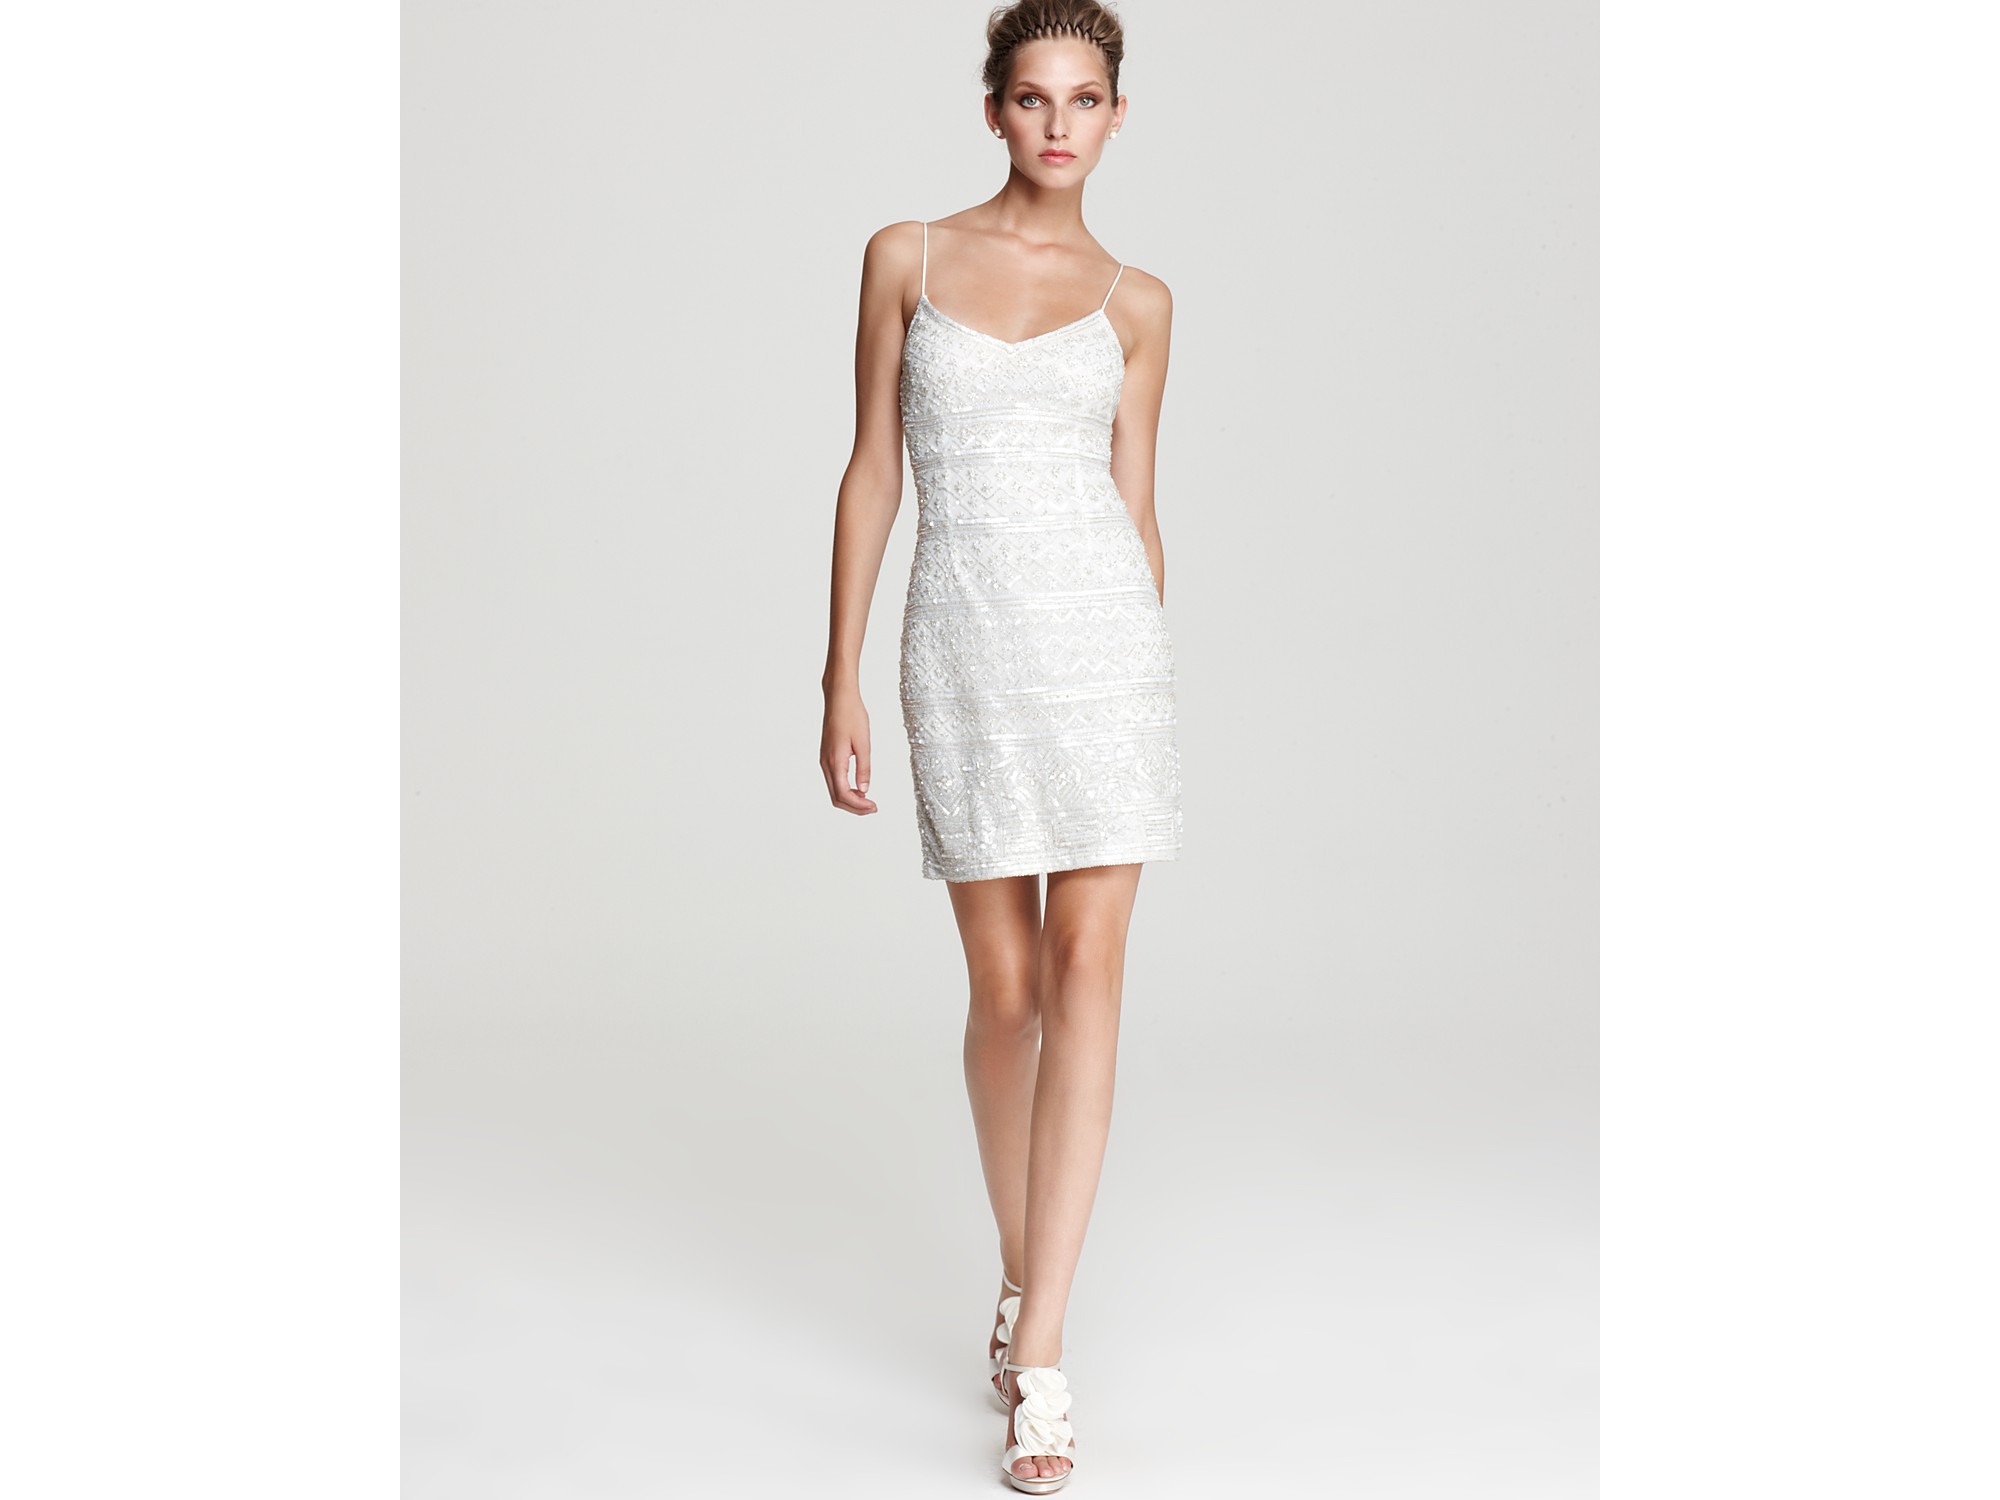 Lyst - Theia Beaded Slip Dress in White